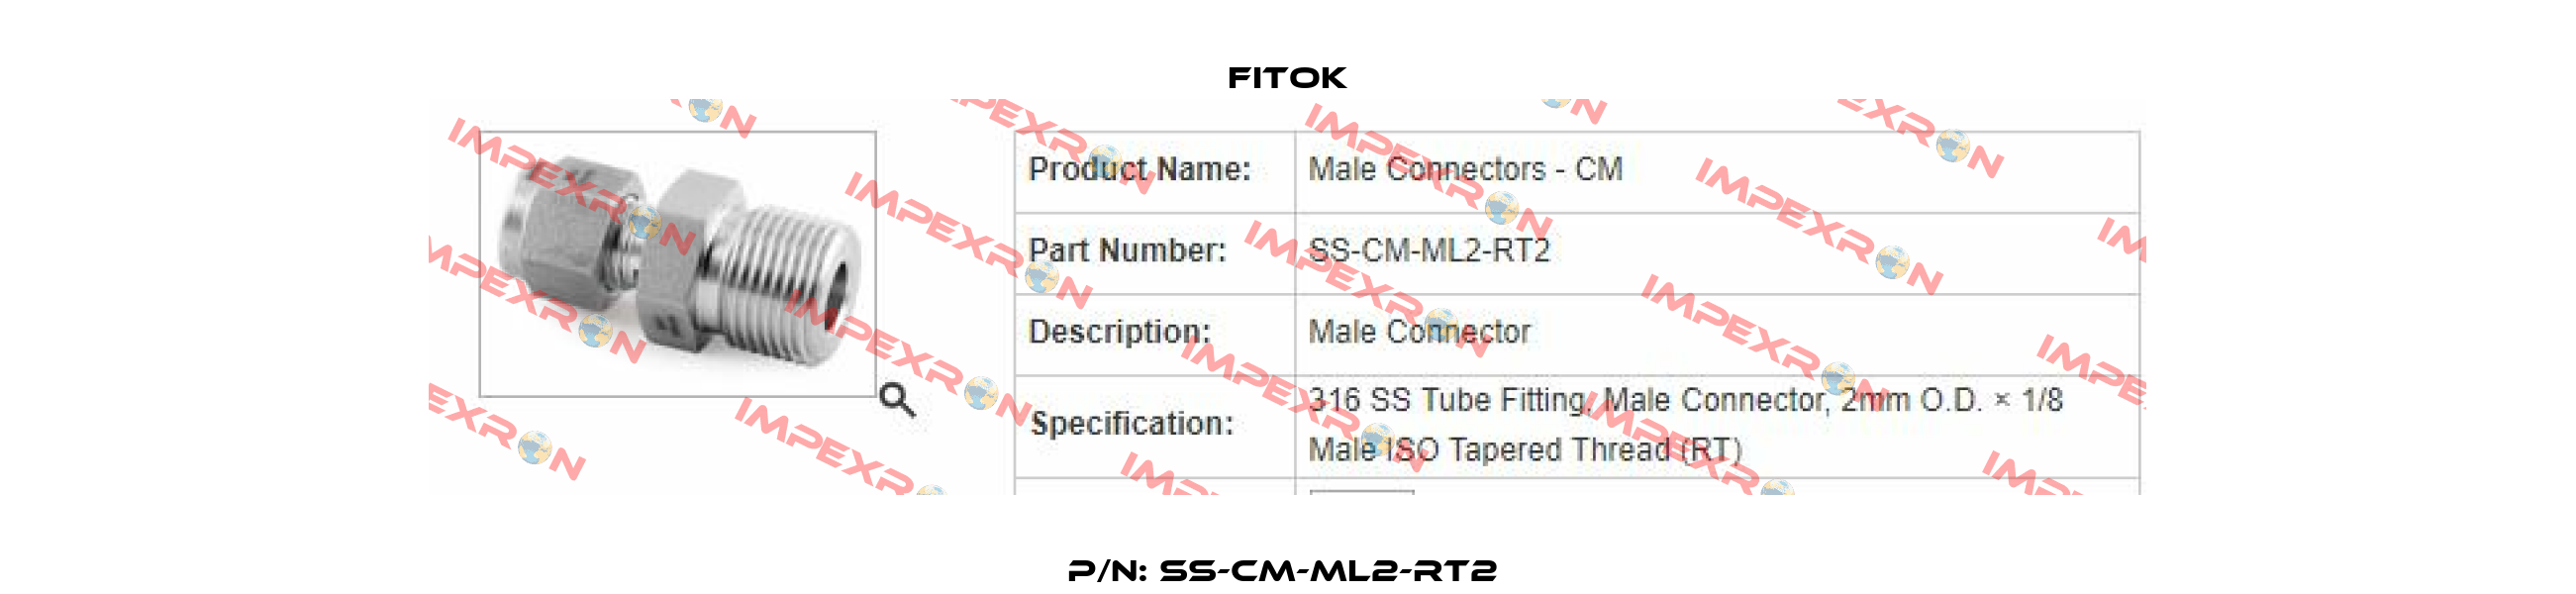 P/N: SS-CM-ML2-RT2  Fitok